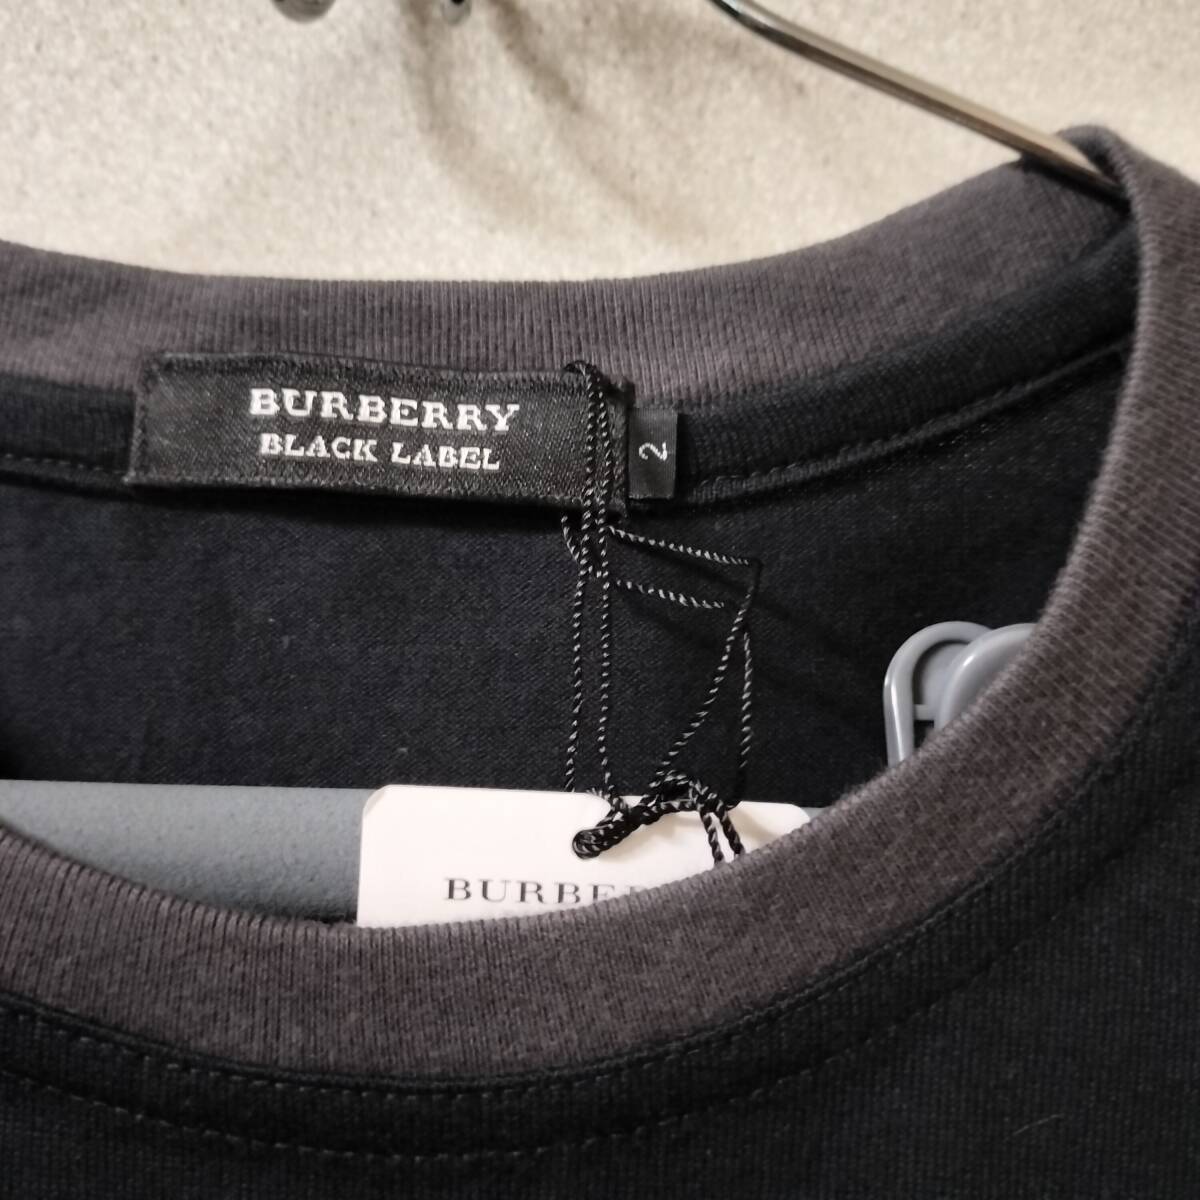 BURBERRY BLACK LABEL バーバリーブラックレーベル 半袖Tシャツ 三陽商会 01_画像6